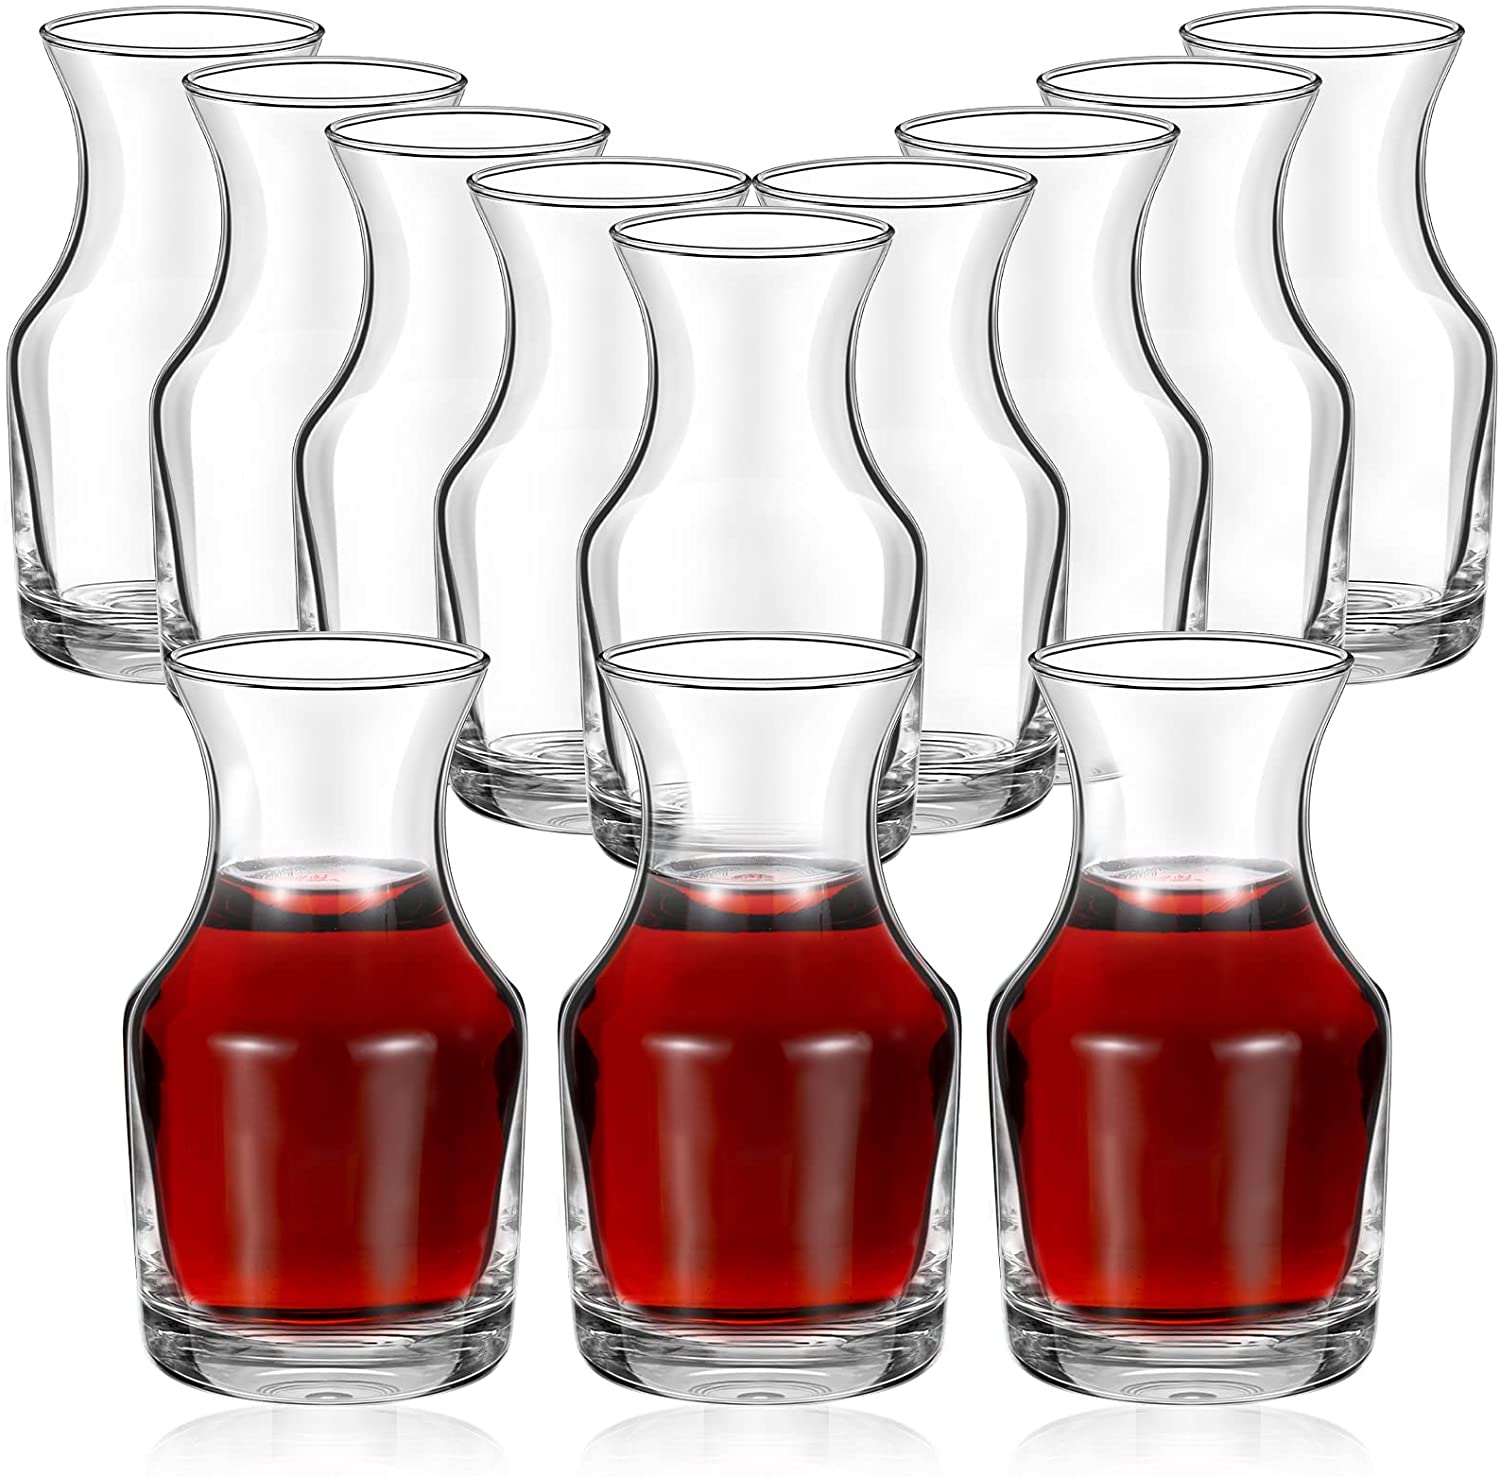 Cornucopia Individual Wine Carafes (6-Pack); Small 6.5oz Single-Serving Personal Mini Size Wine Decanters